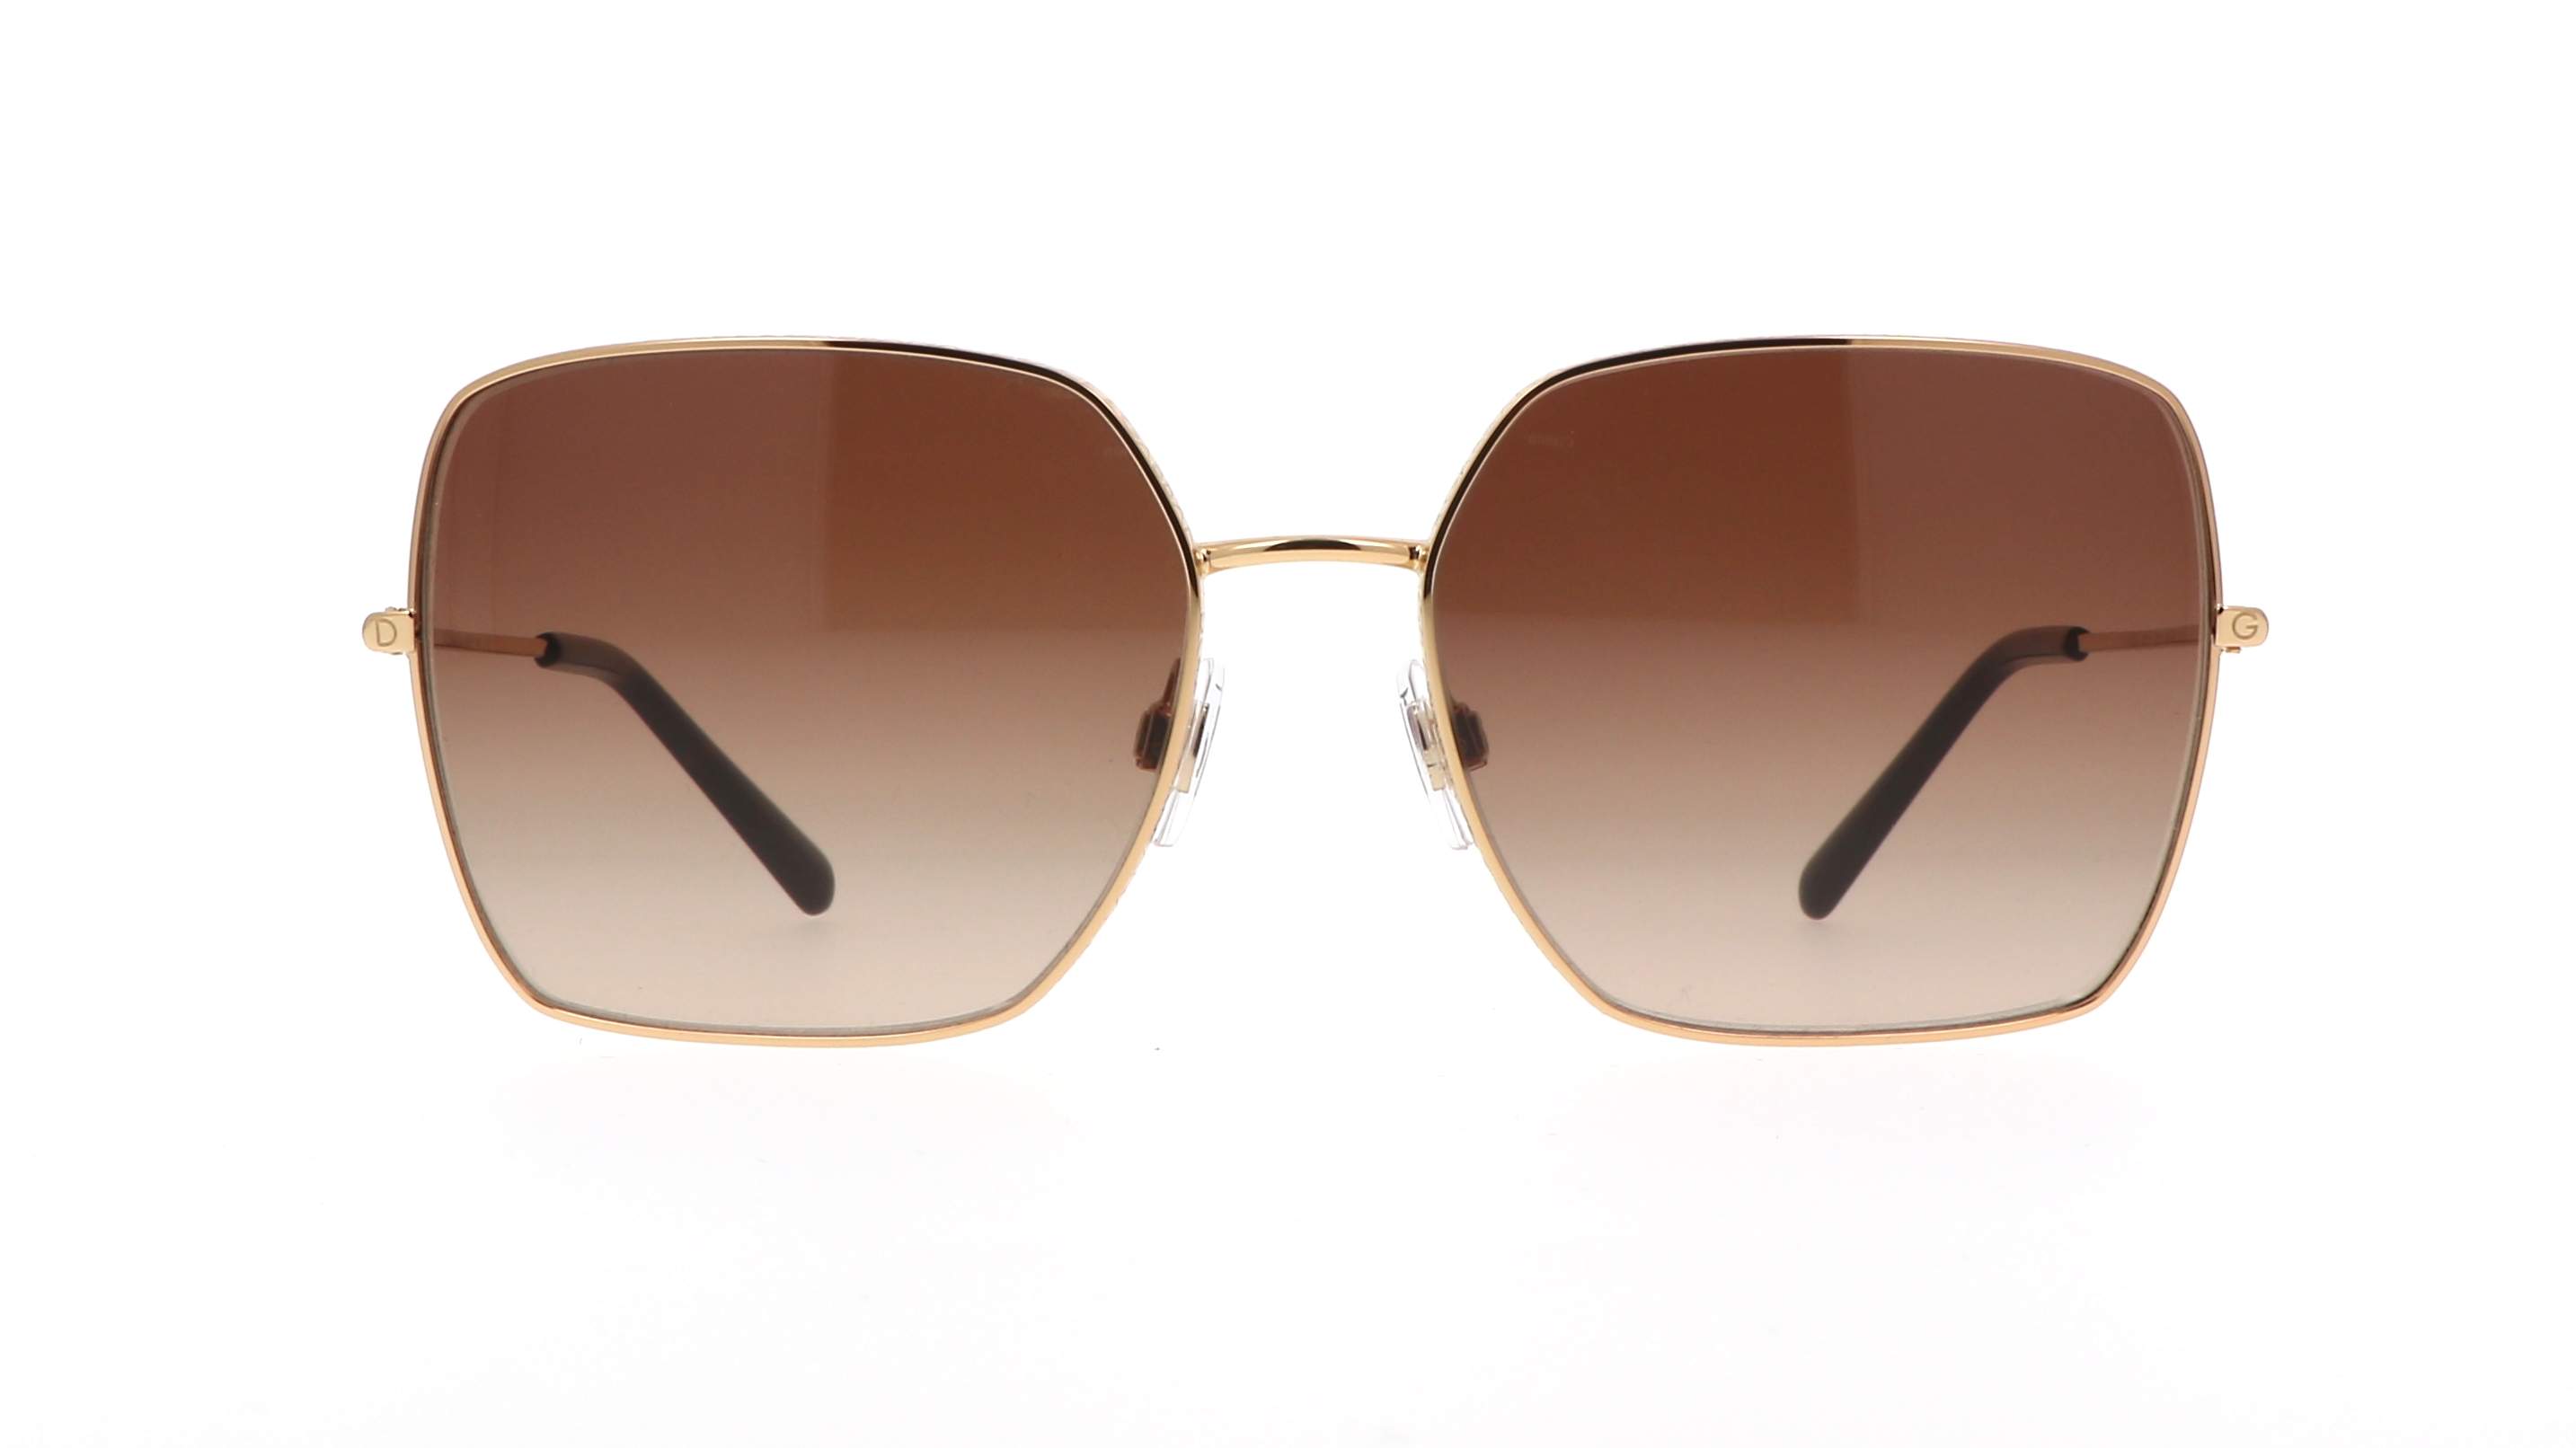 Sunglasses Dolce & Gabbana DG2242 02/13 57-16 Gold Gradient in stock ...